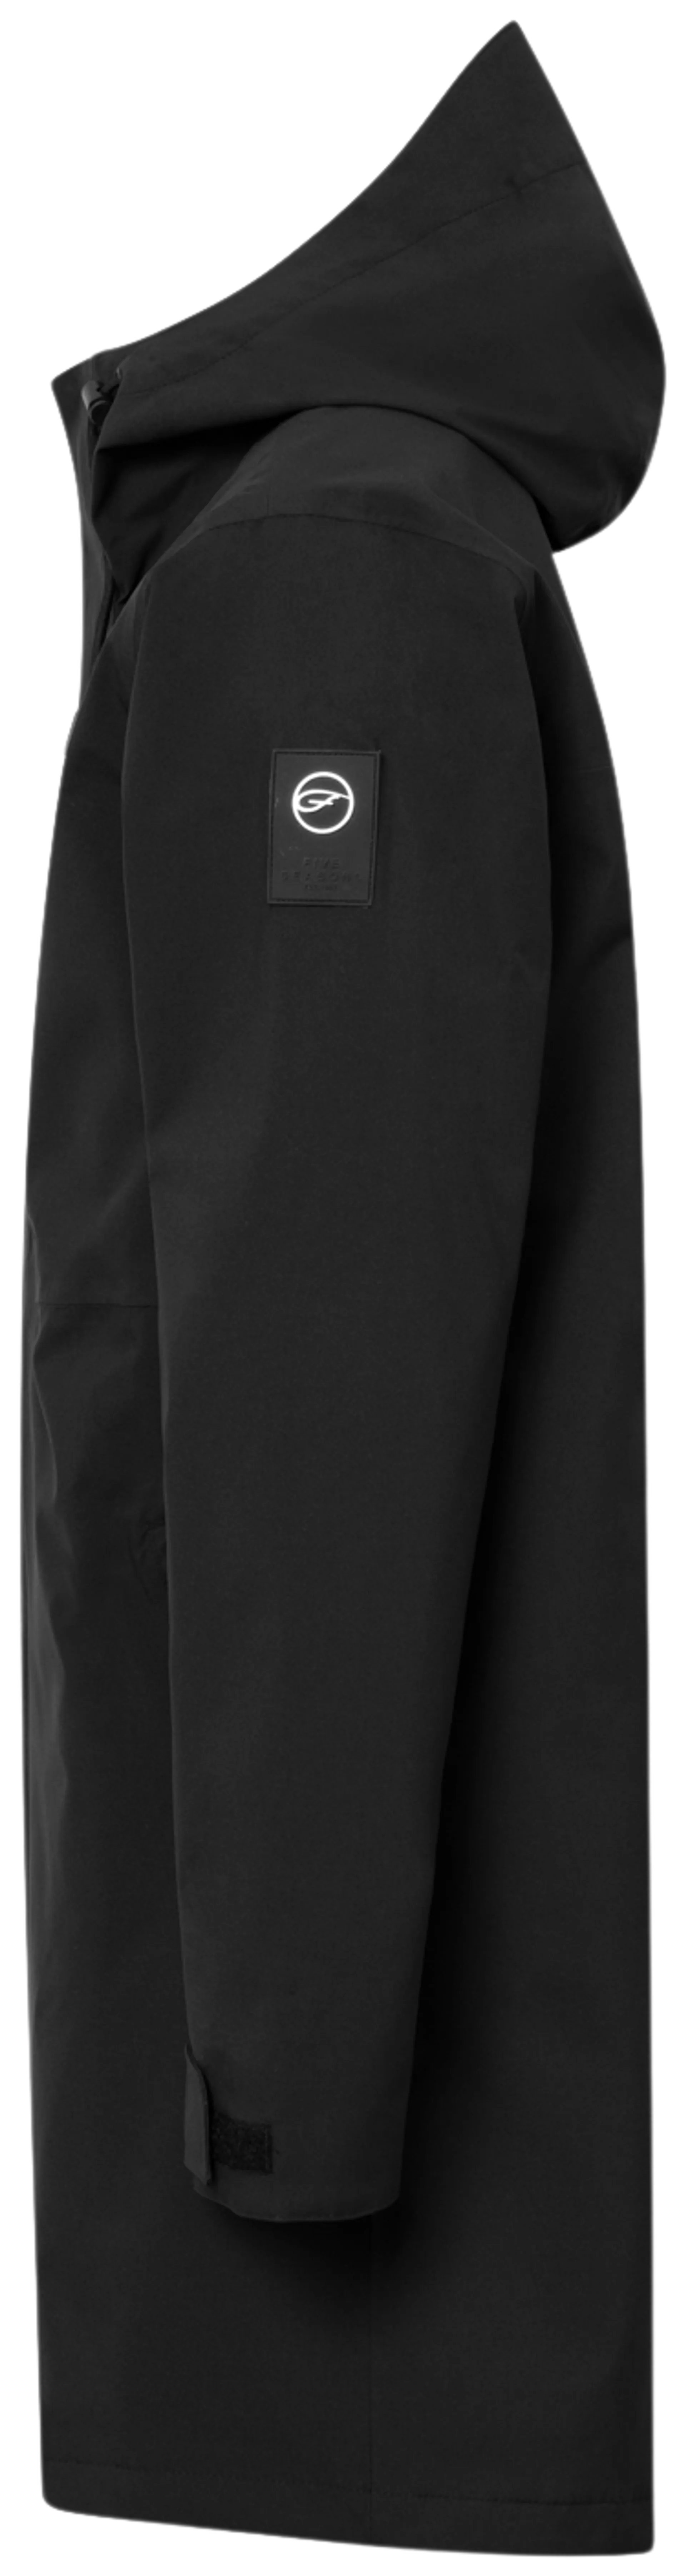 Five Seasons miesten pitkä takki Luis 10553 - BLACK - 3